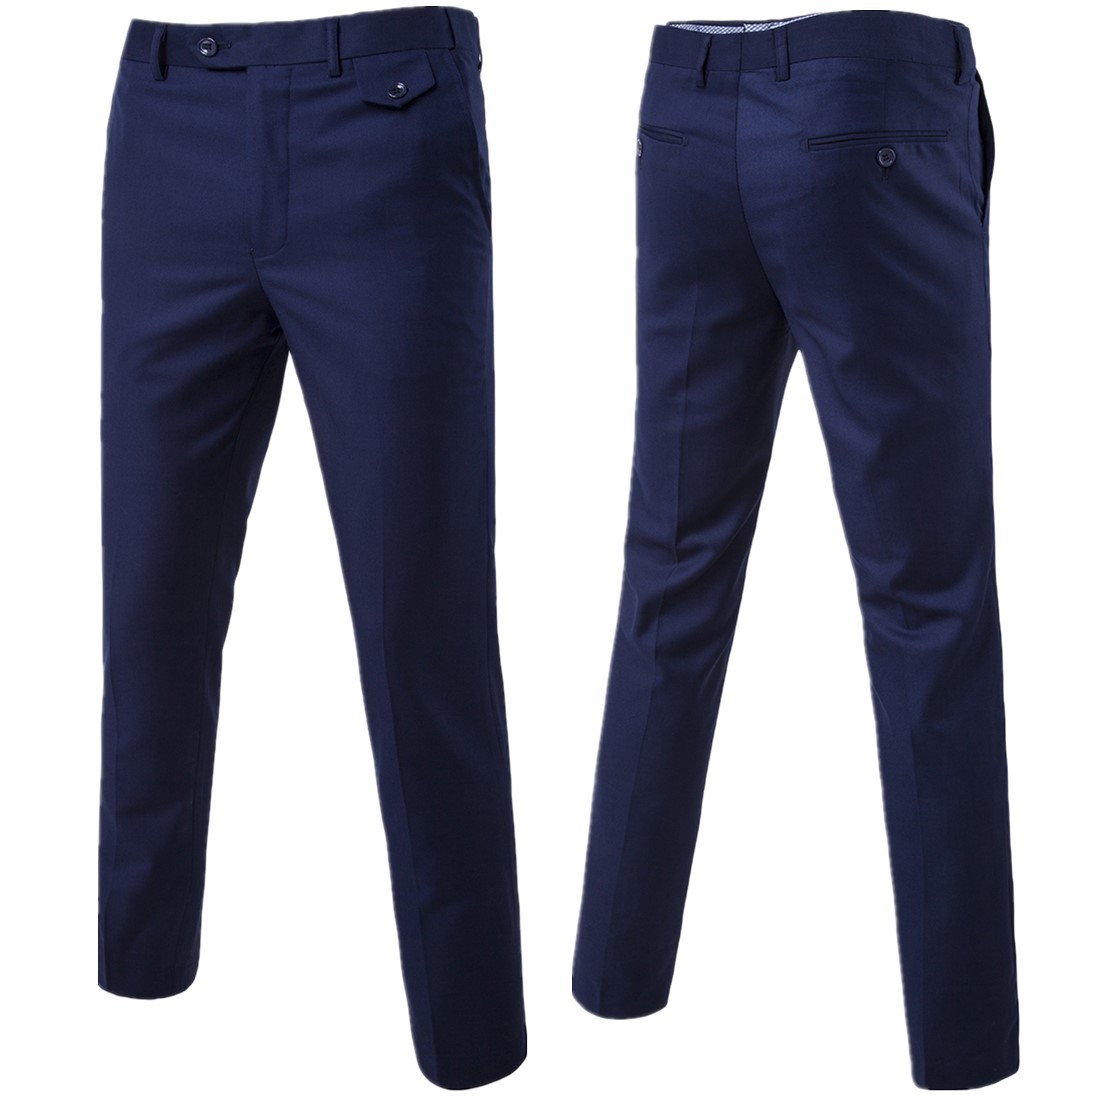 Men Suit Pants Cotton Solid Casual Business Formal Bridegroom Plus Size Wedding Trousers Navy Blue